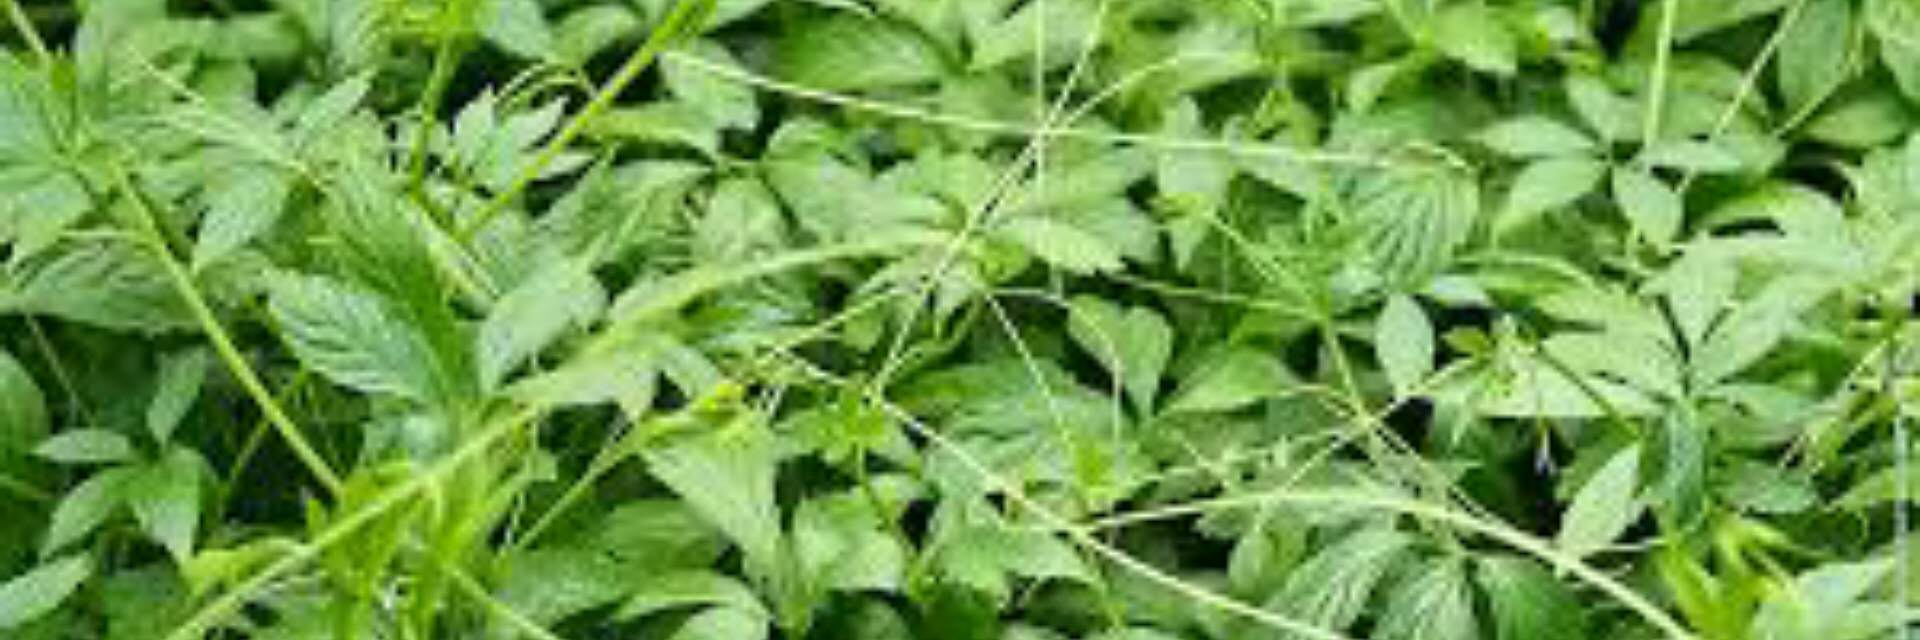 Jiaogulan of Gynostemma Pentaphyllum adaptogene anti-cancer tea plant